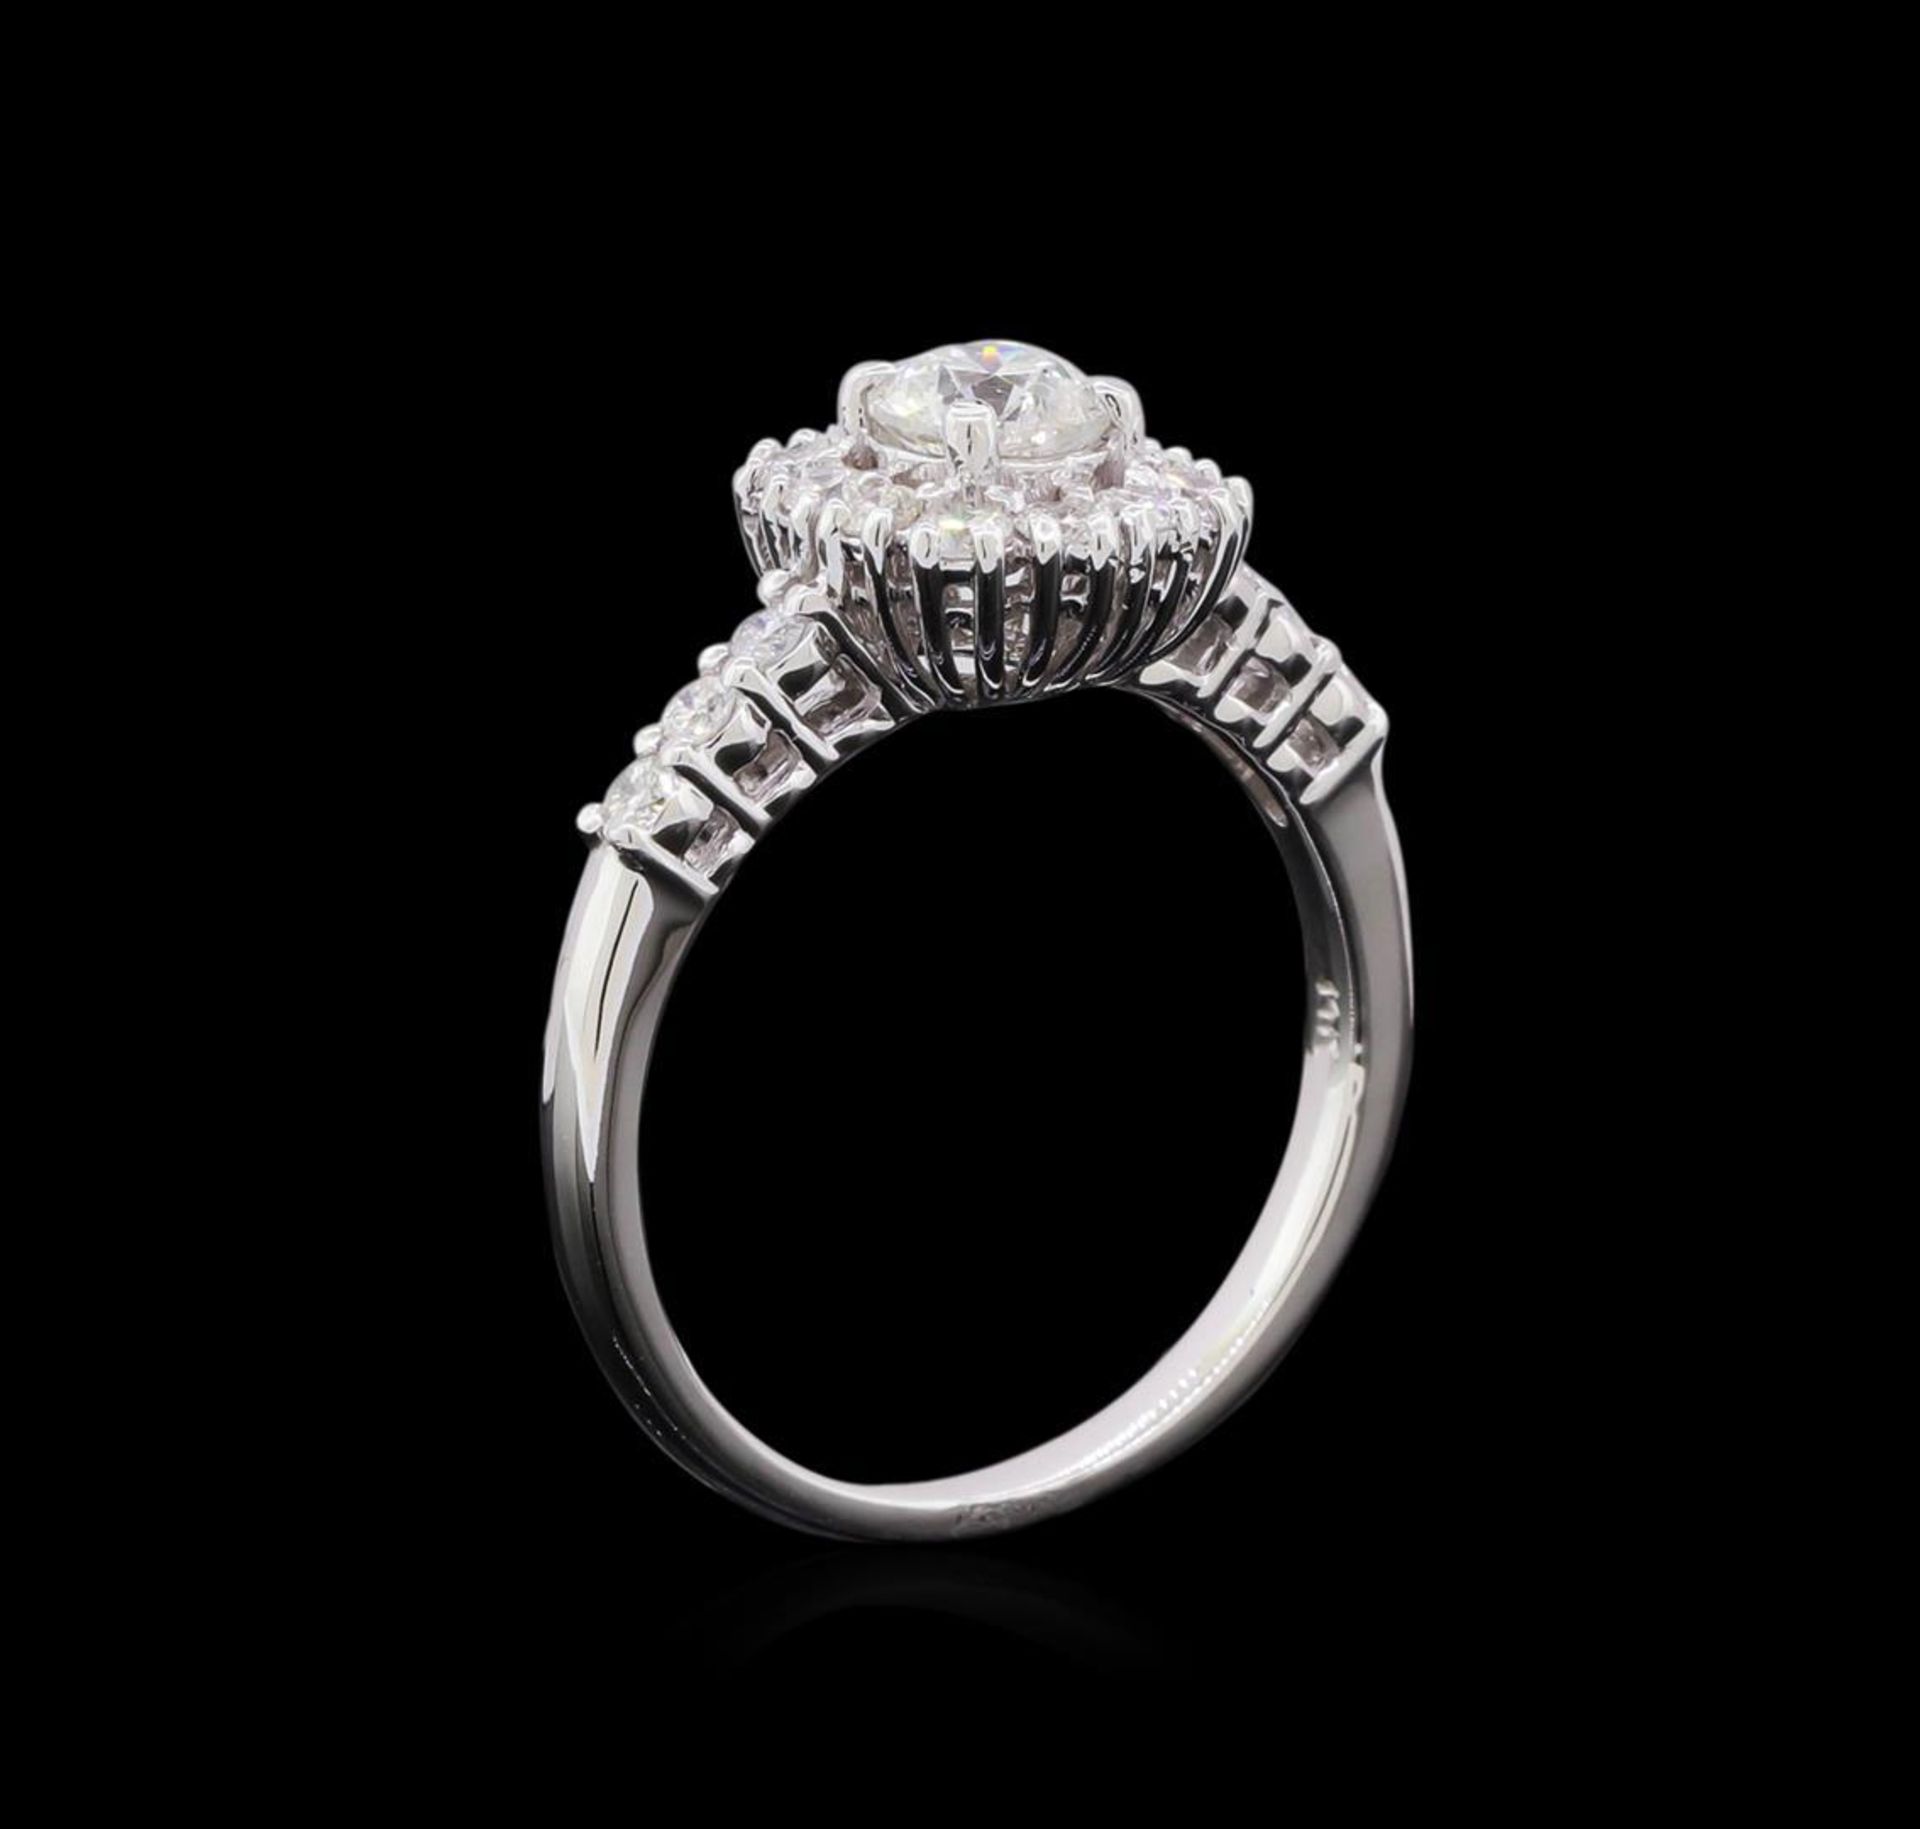 0.98ctw Diamond Ring - 14KT White Gold - Image 4 of 5